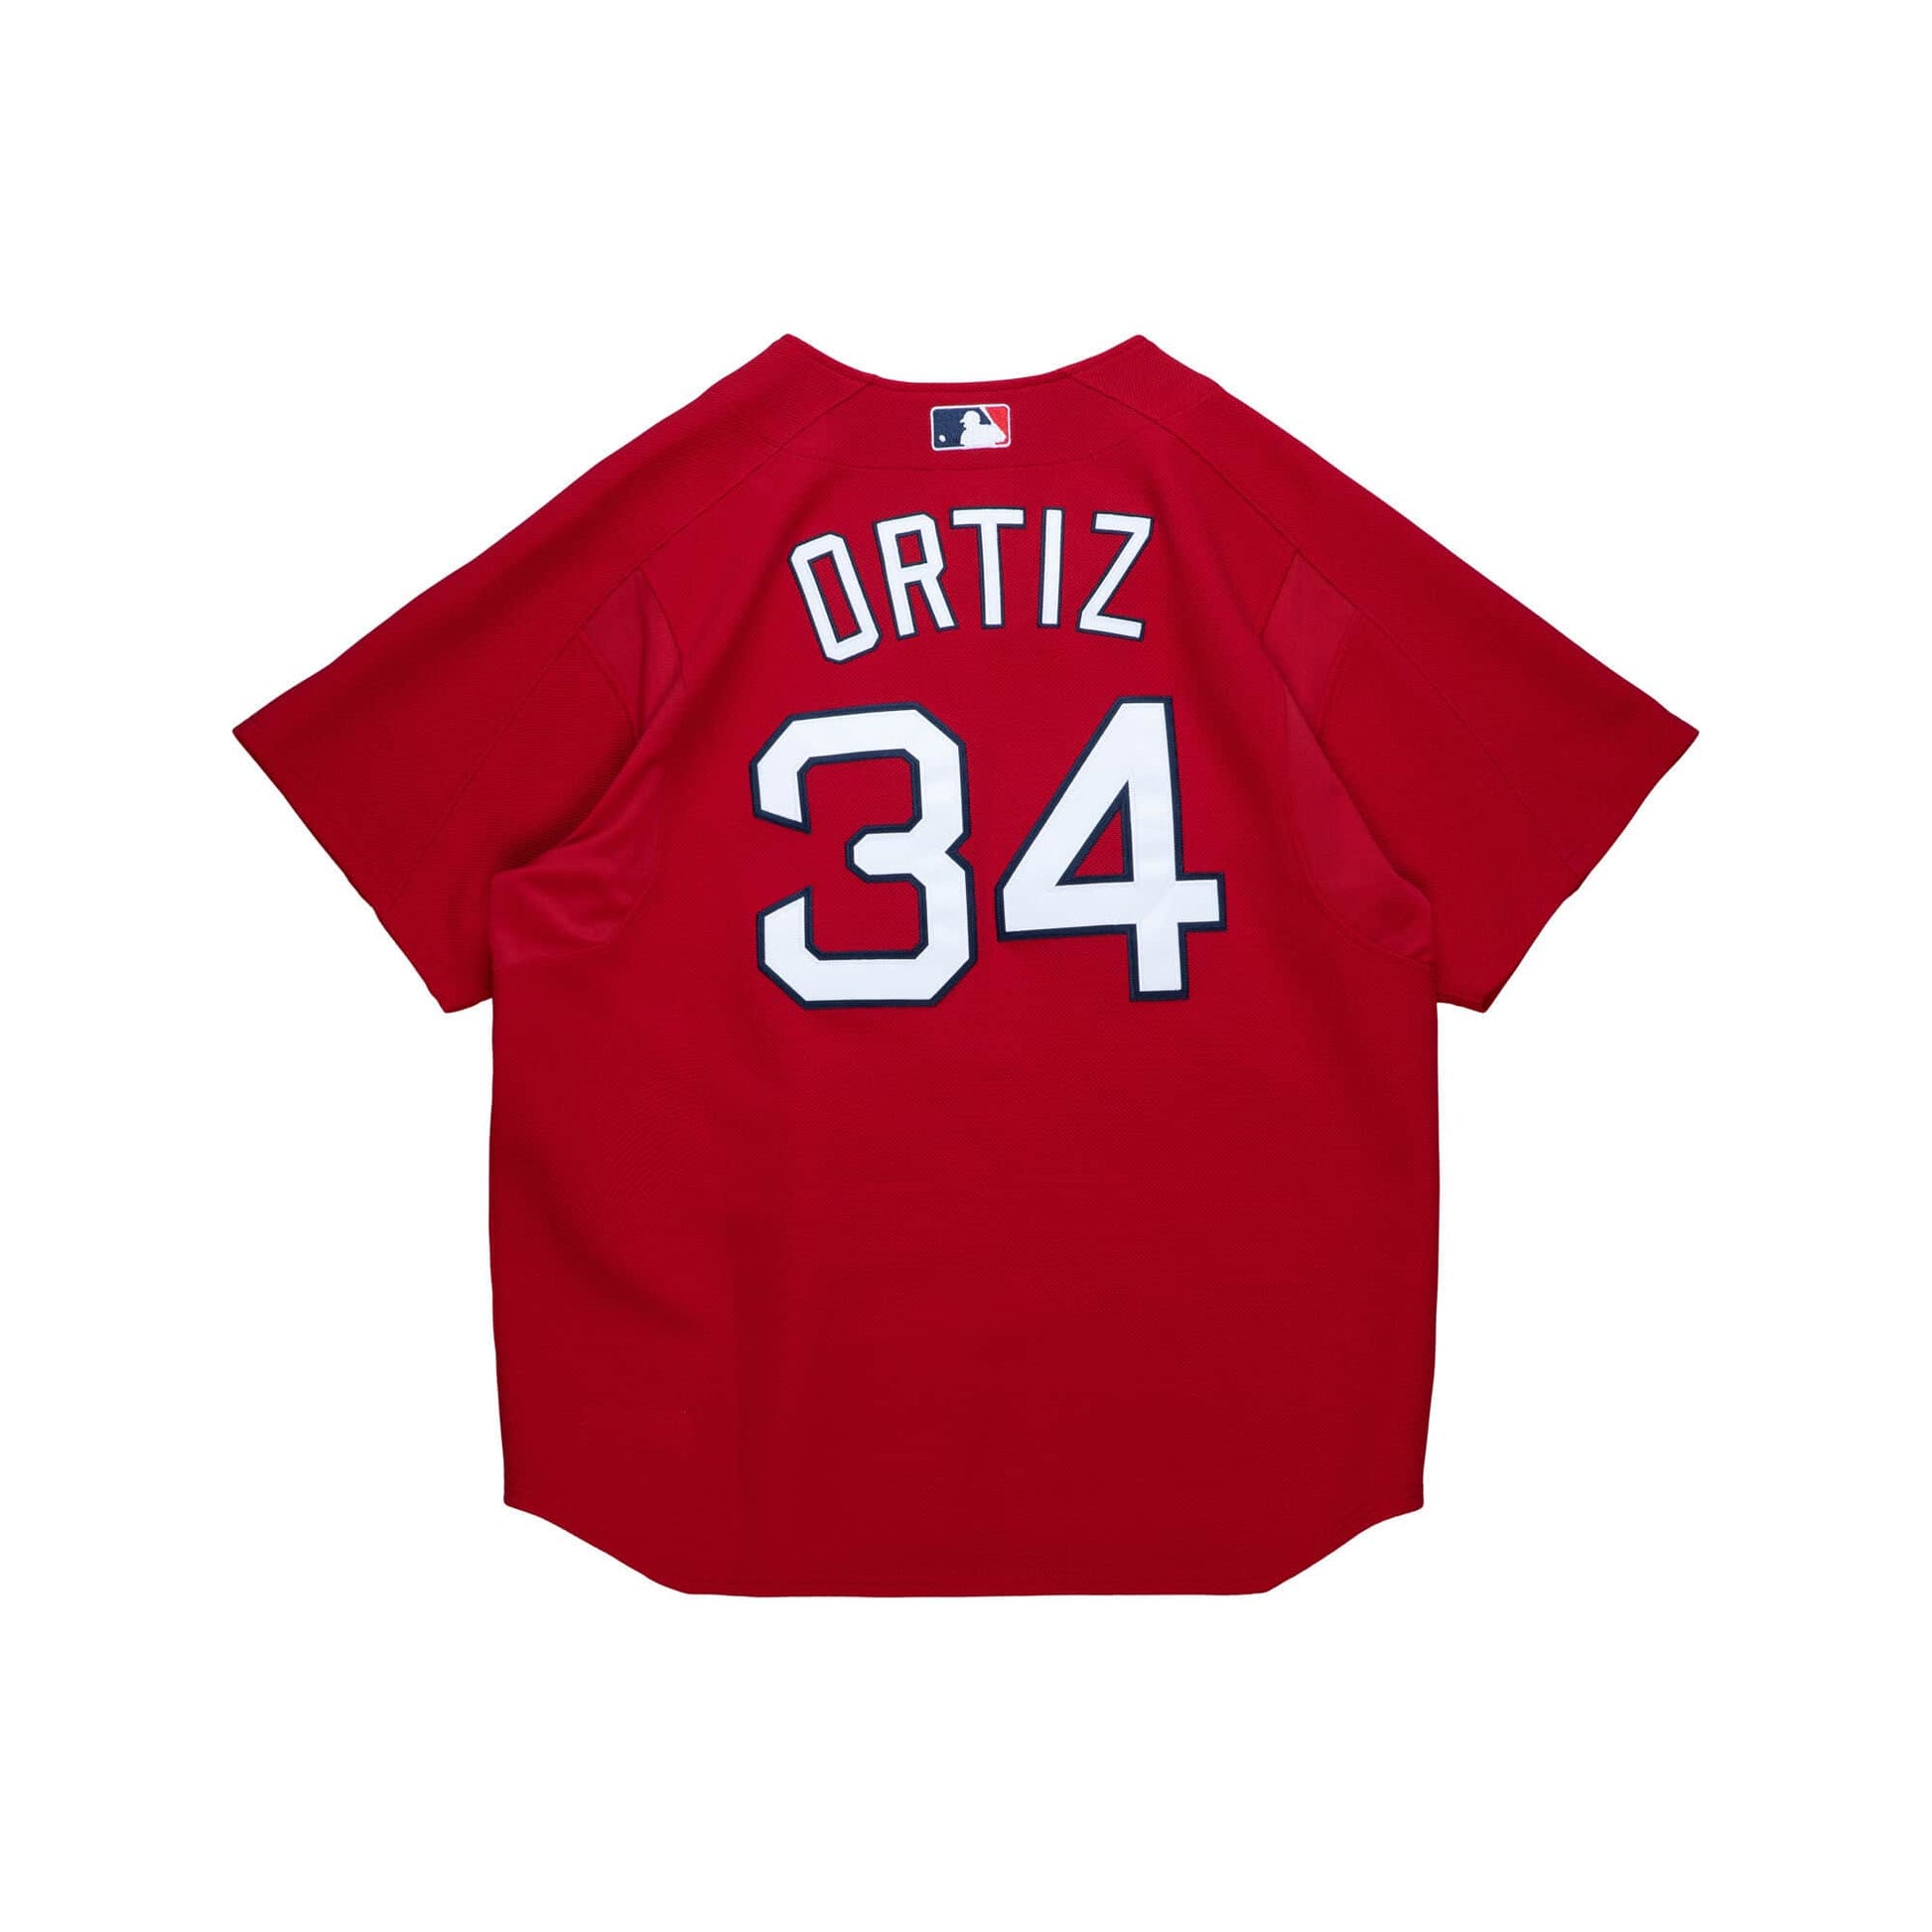 David Ortiz Big Papi Number 34 Boston Red Sox T-Shirt Sweatshirt